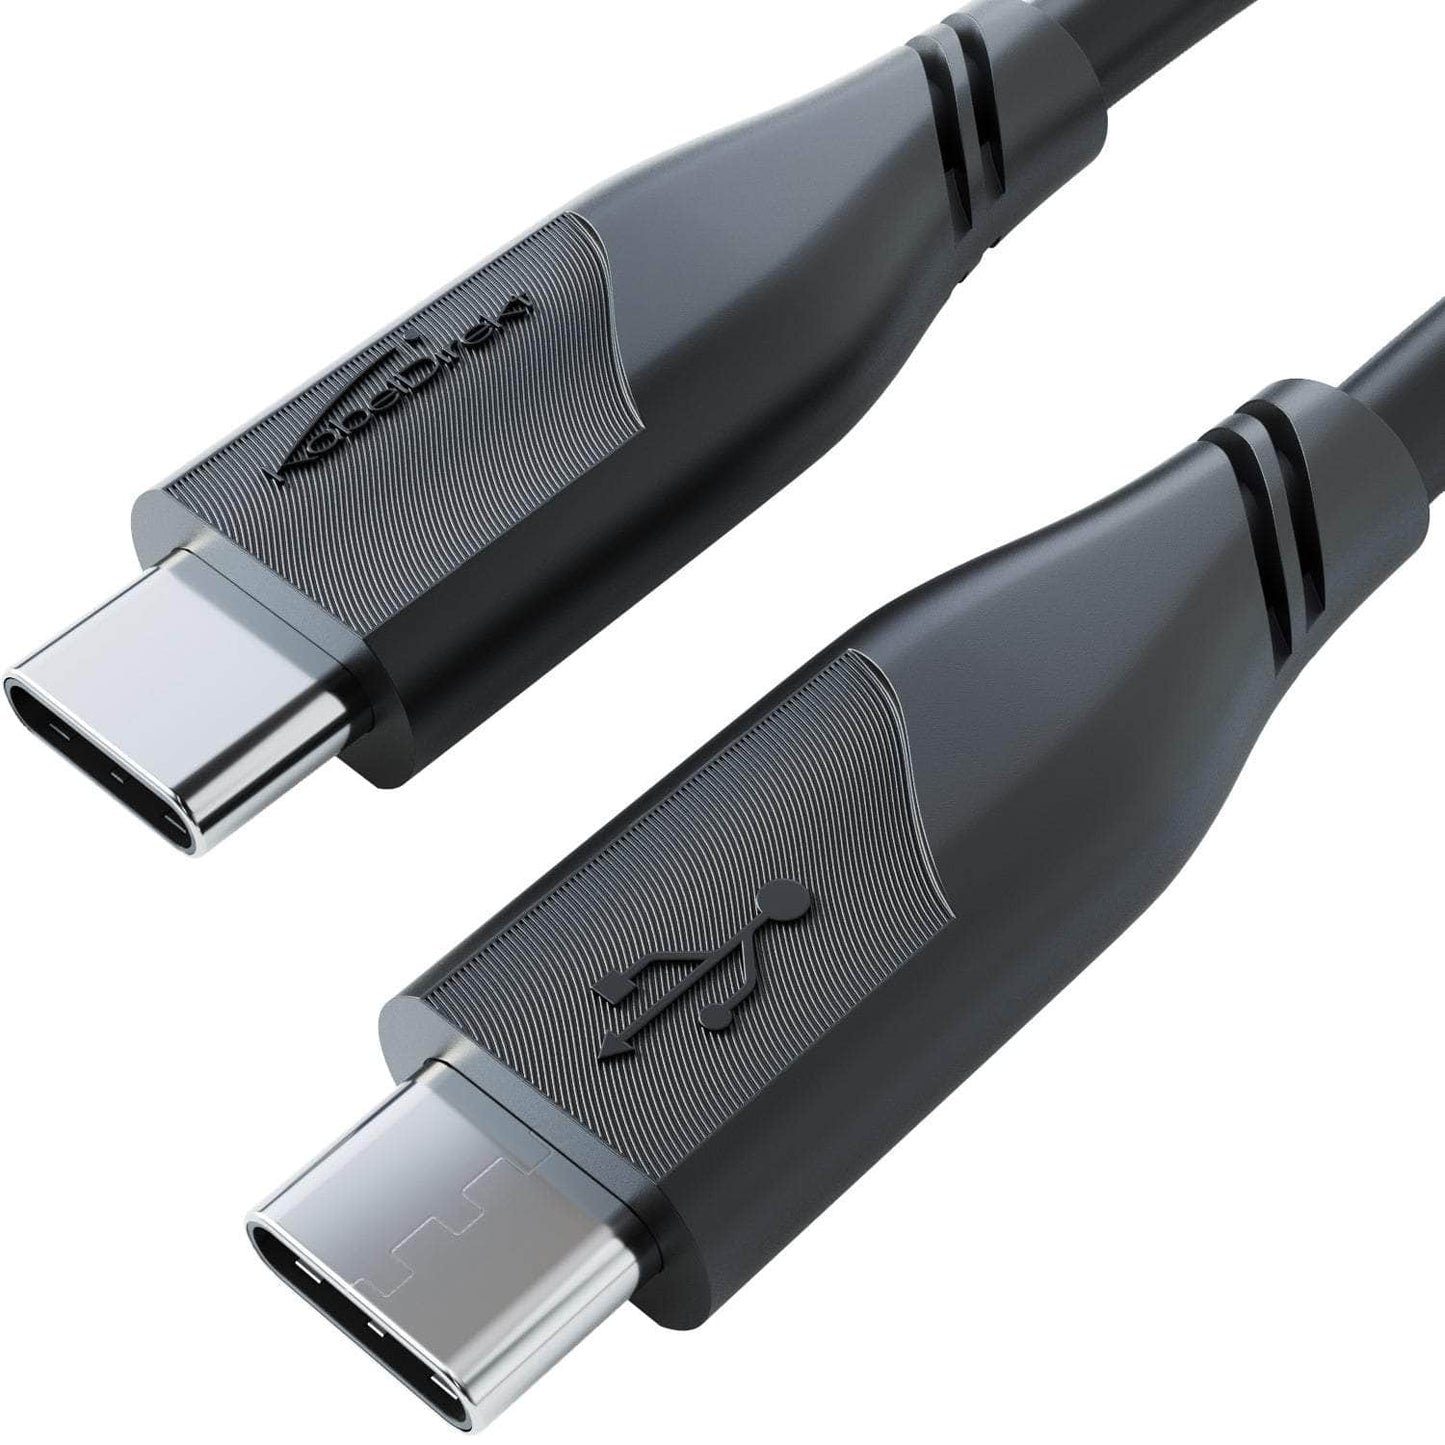 USB C Cable - USB 2.0, Power Delivery 3, black – KabelDirekt